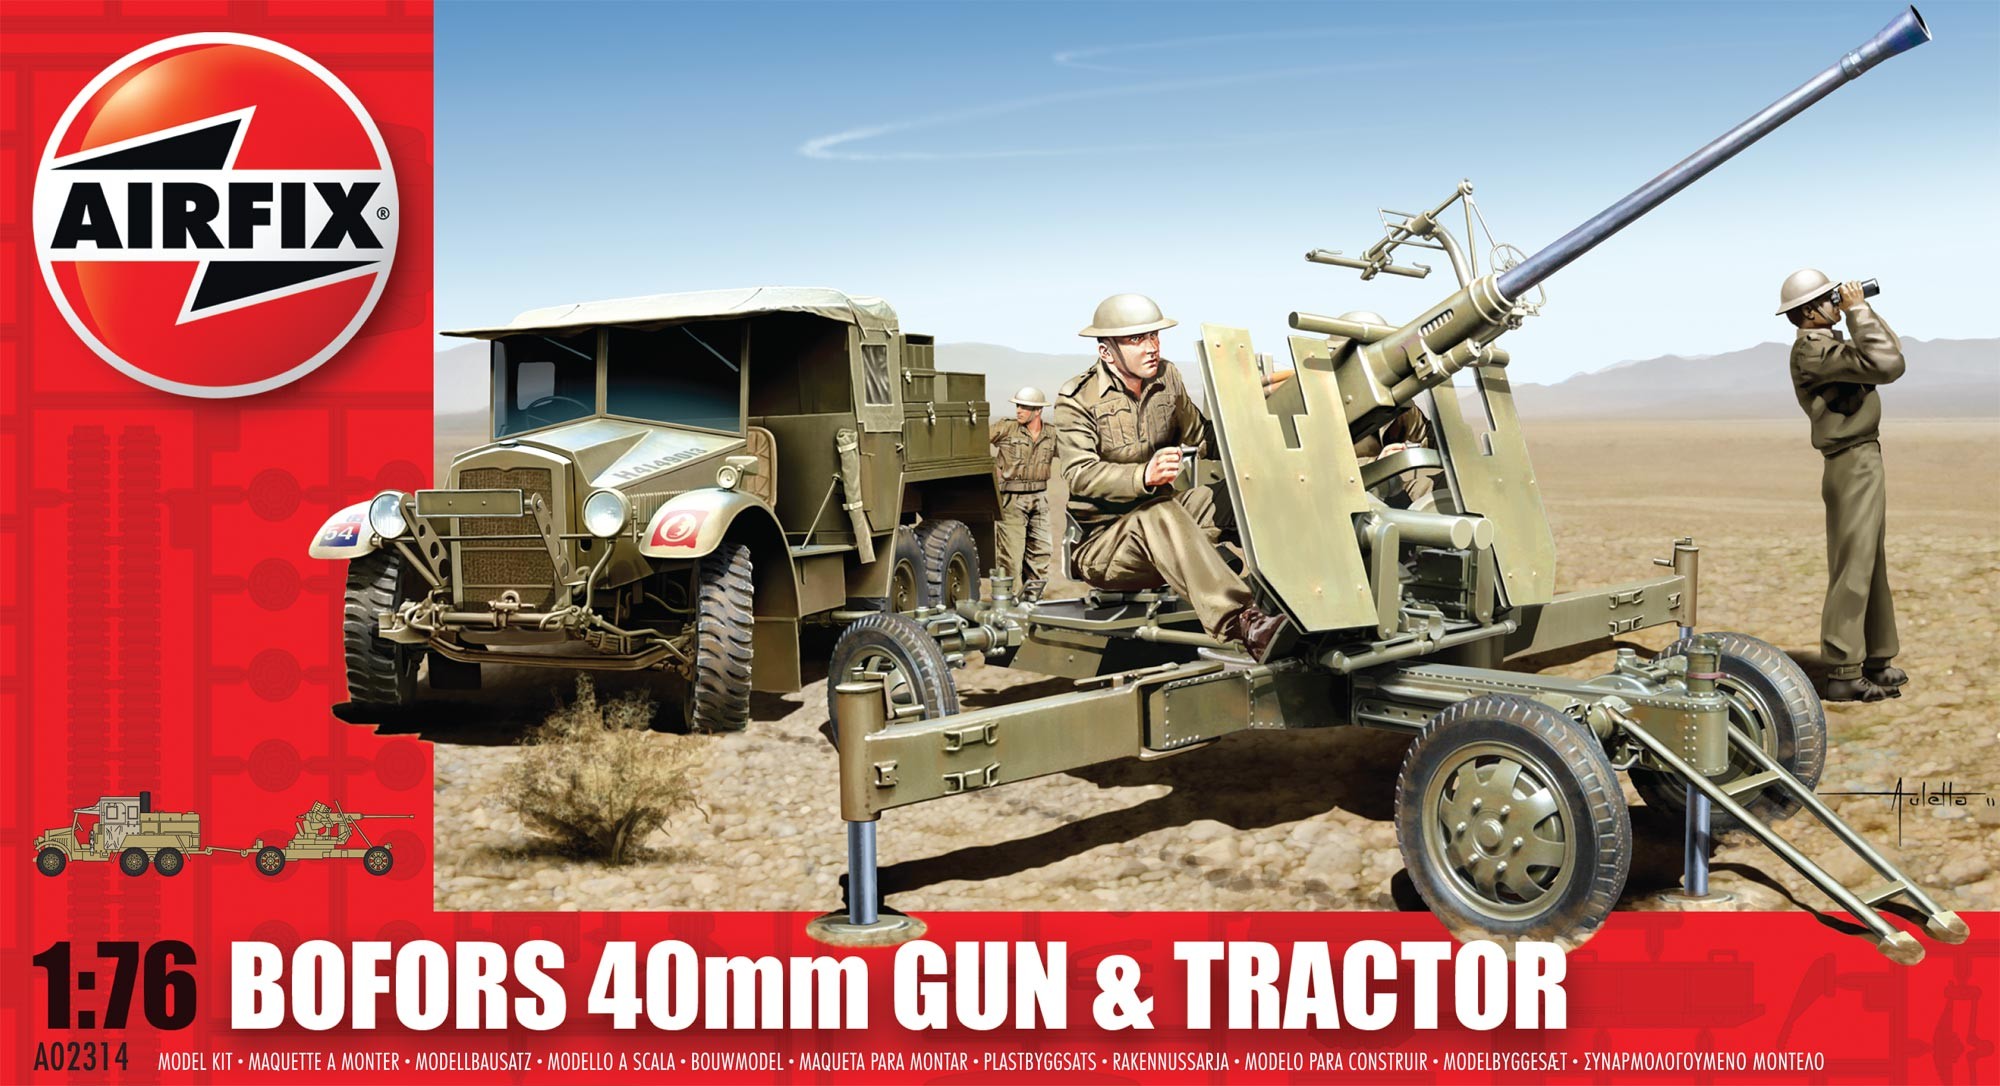 Airfix Bofors Gun and Tractor in 1:76 bouwpakket